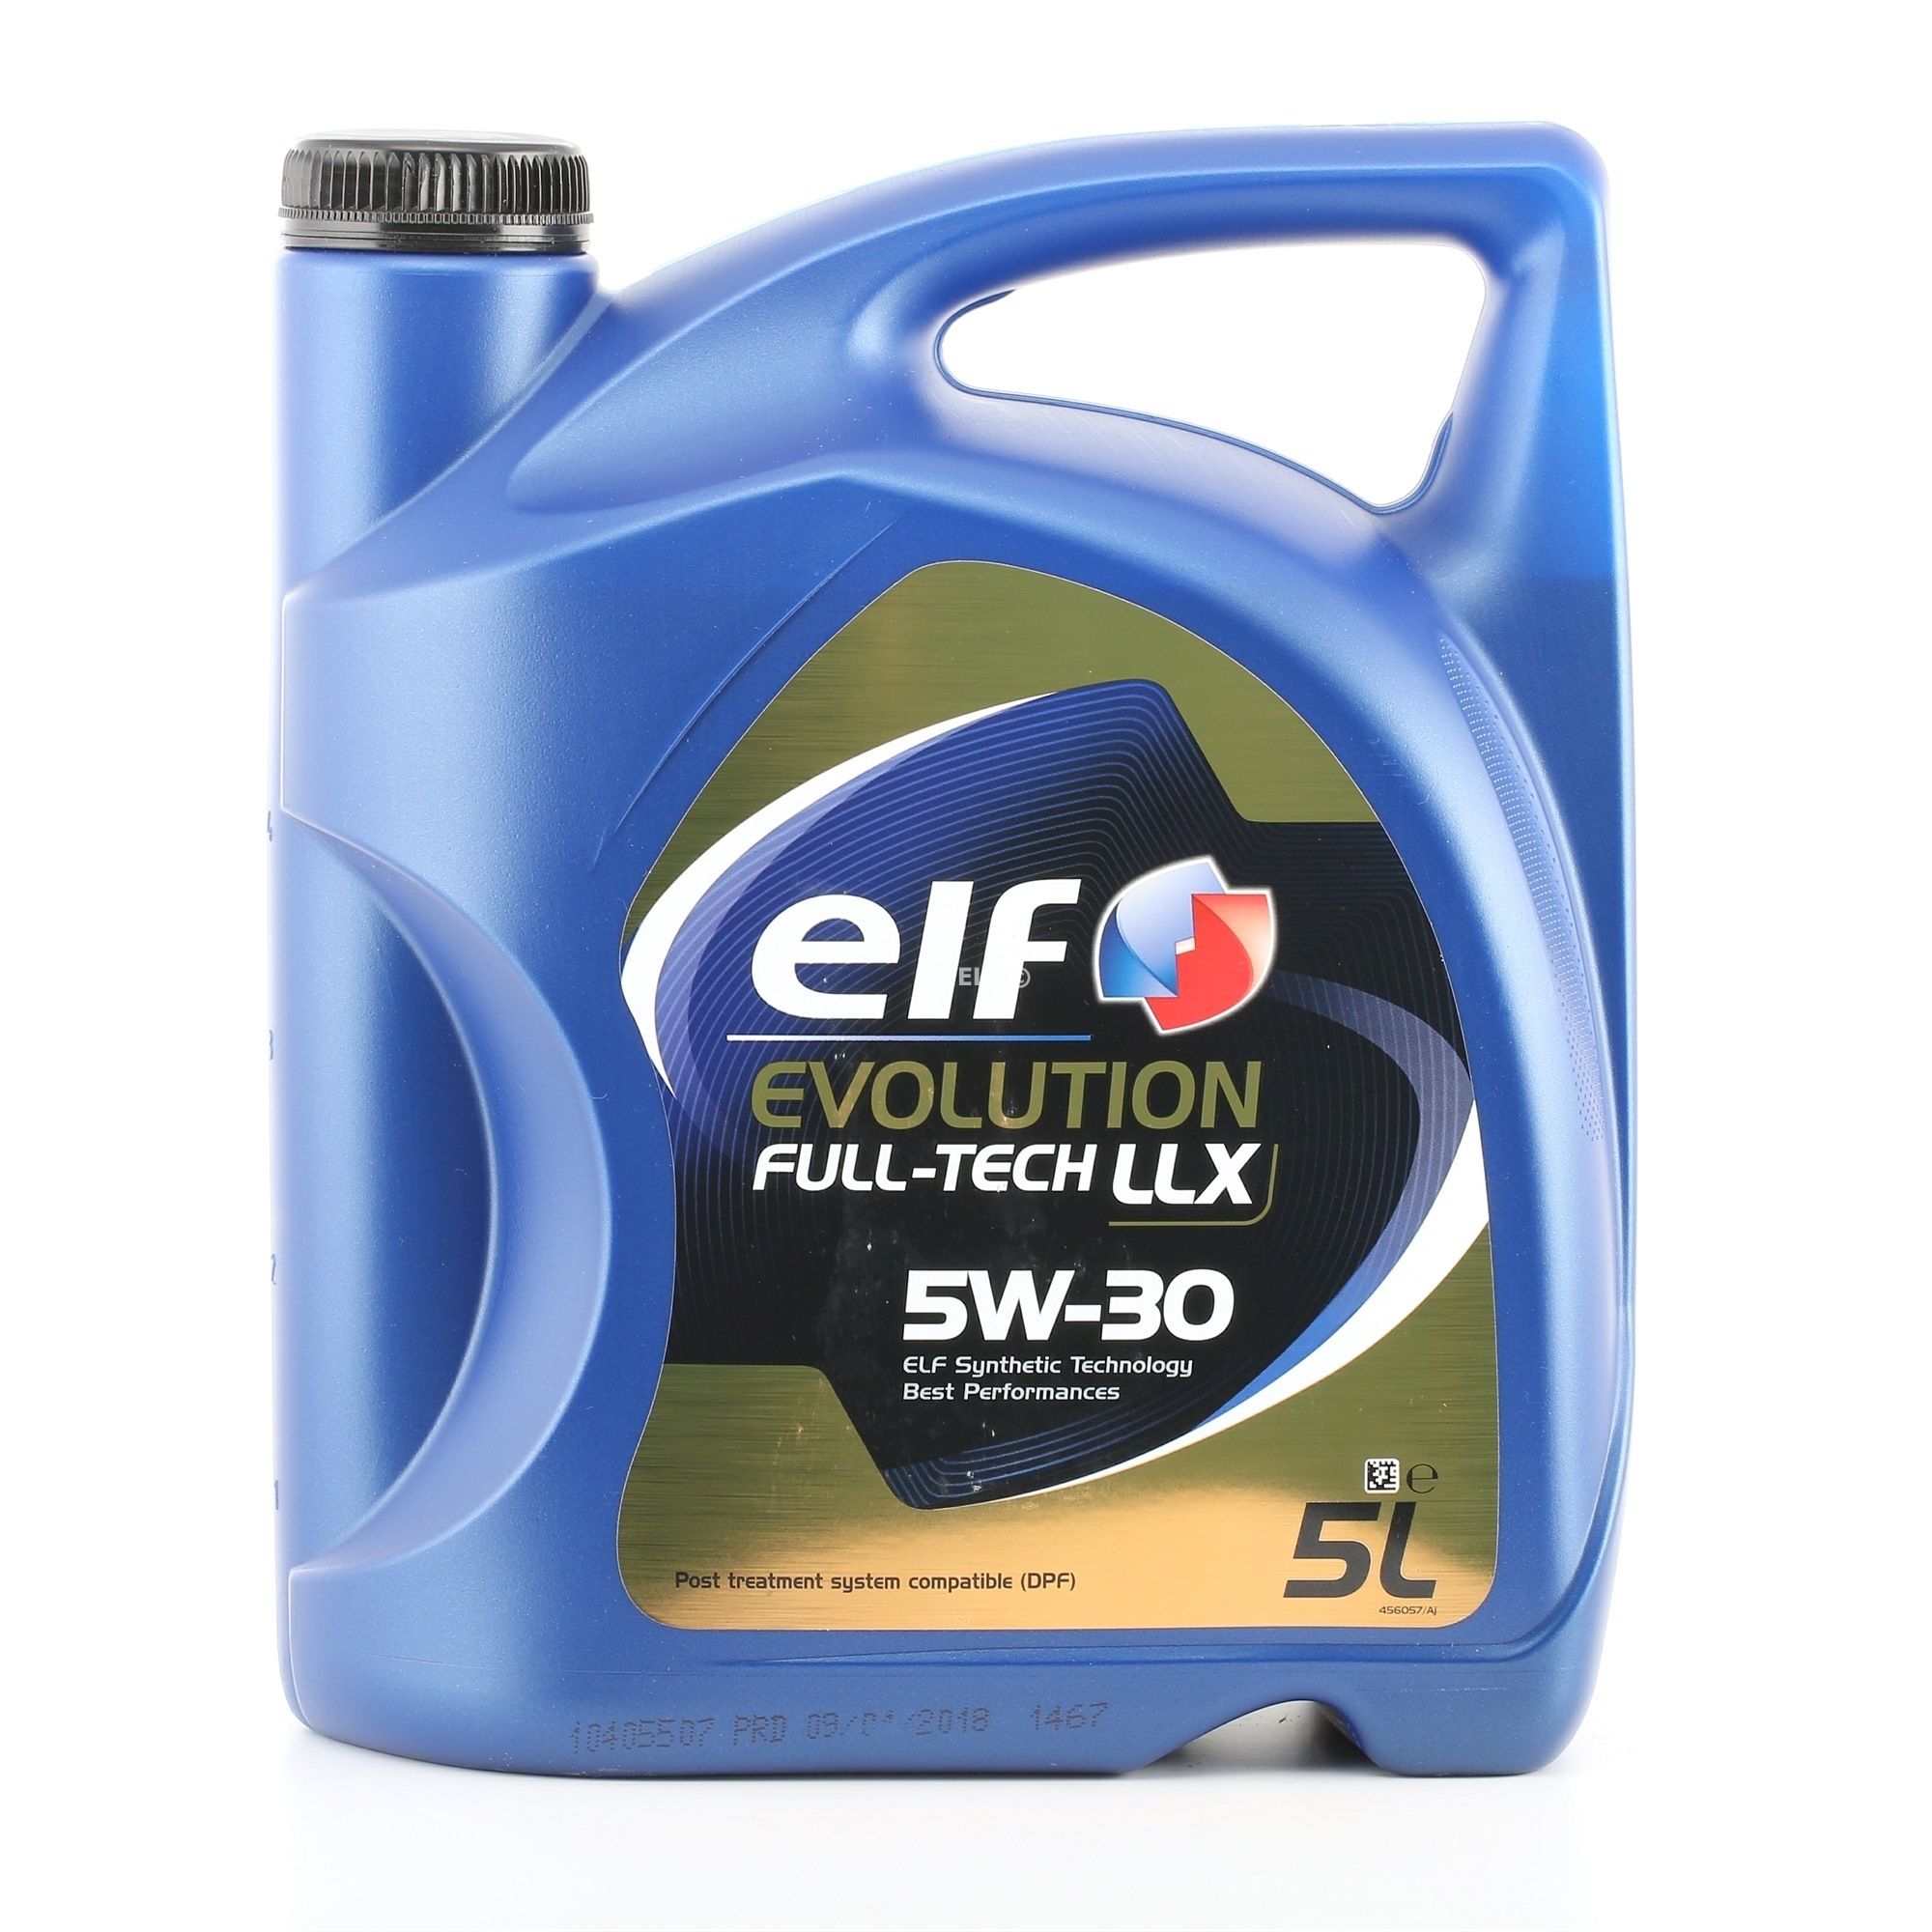 ELF Evolution, Full-Tech LLX 2194890 Motoröl 5W-30, 5l, Synthetiköl